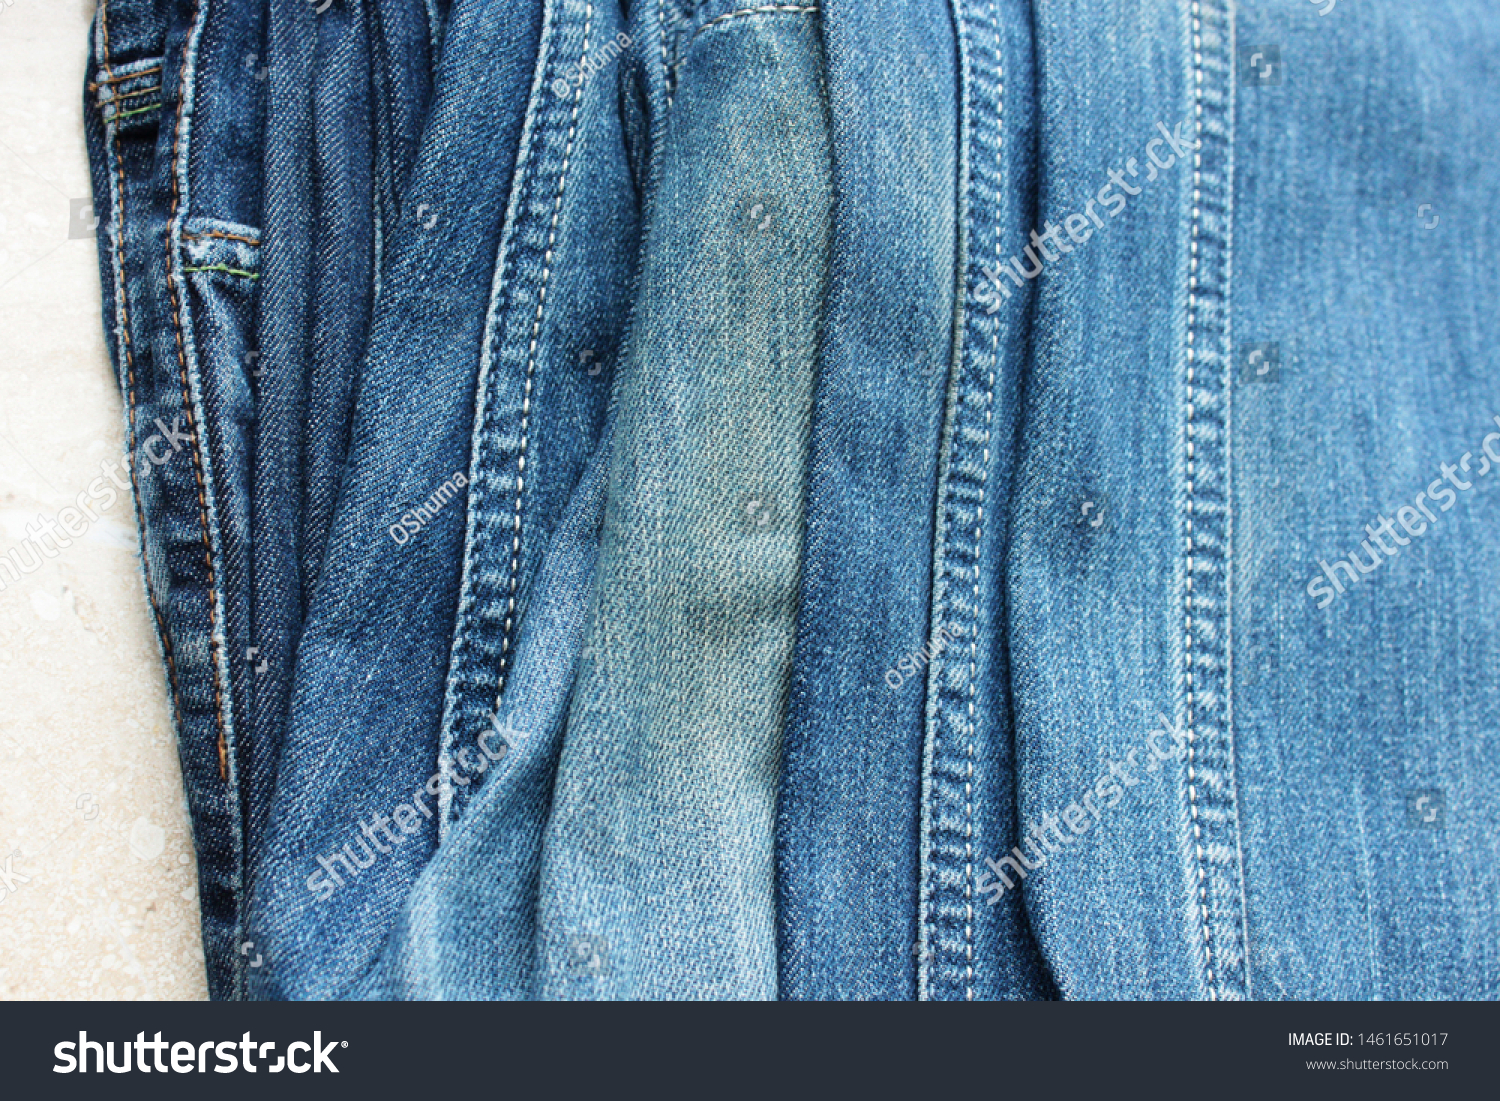 Denim. jeans texture. Jeans background. Denim jeans texture or denim jeans background. #1461651017